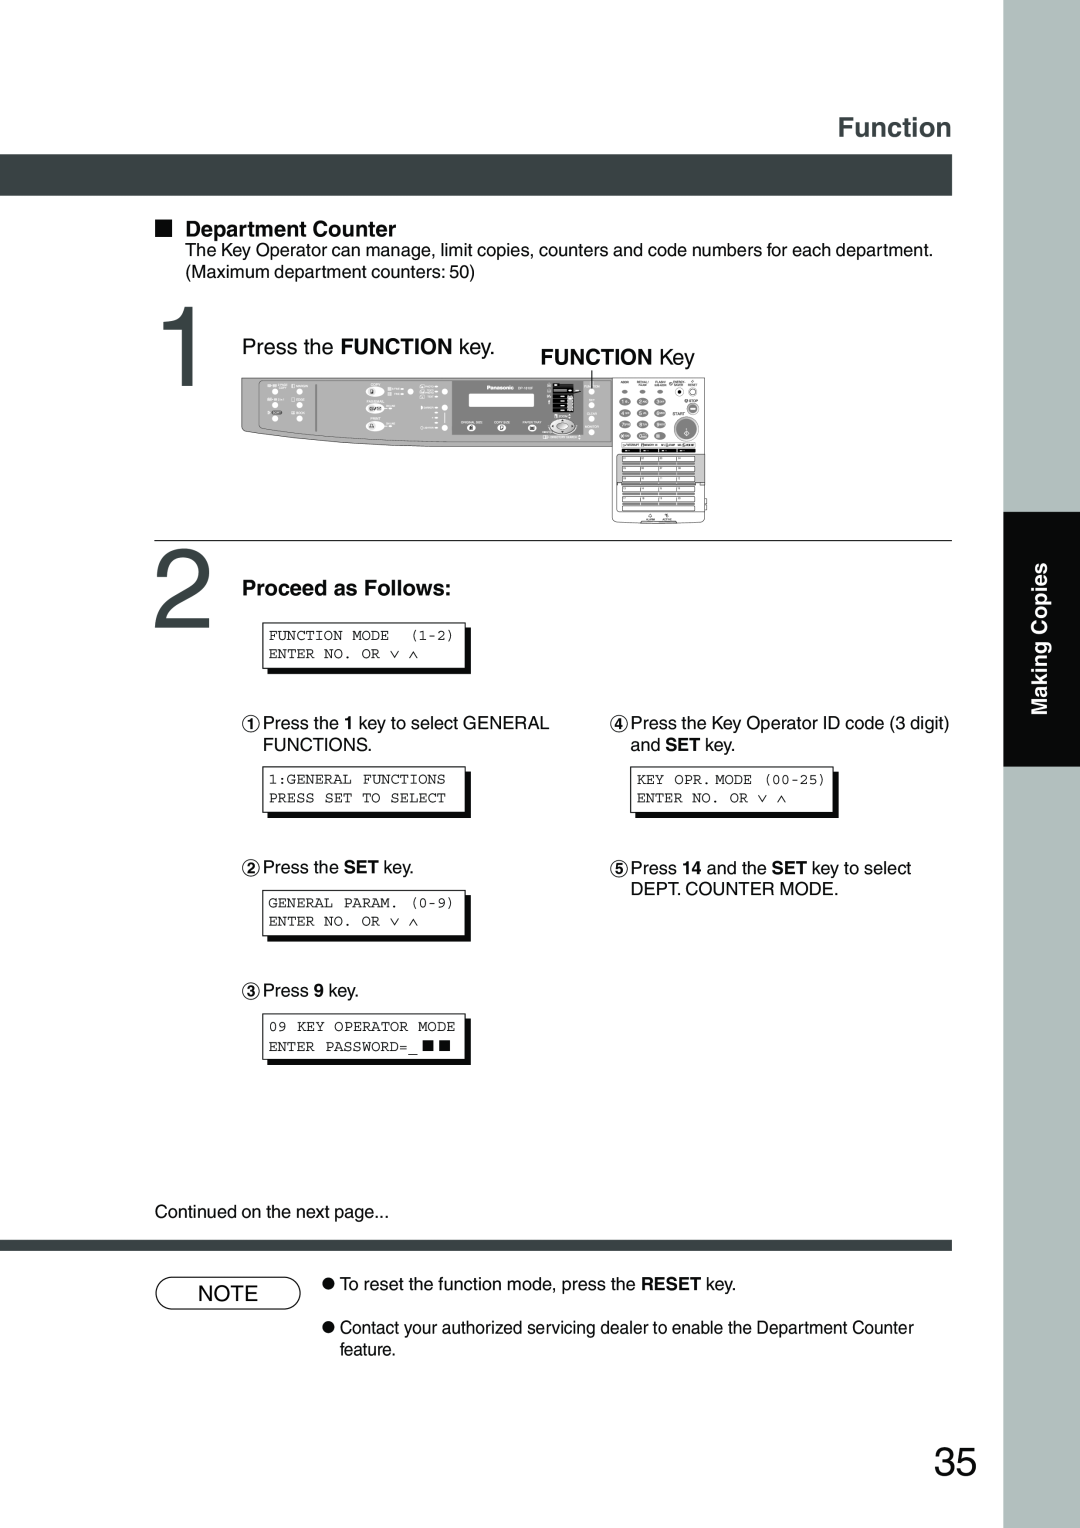 Panasonic DP-1810F manual Department Counter, Function, Proceed as Follows, Making Copies, FUNCTION Key 